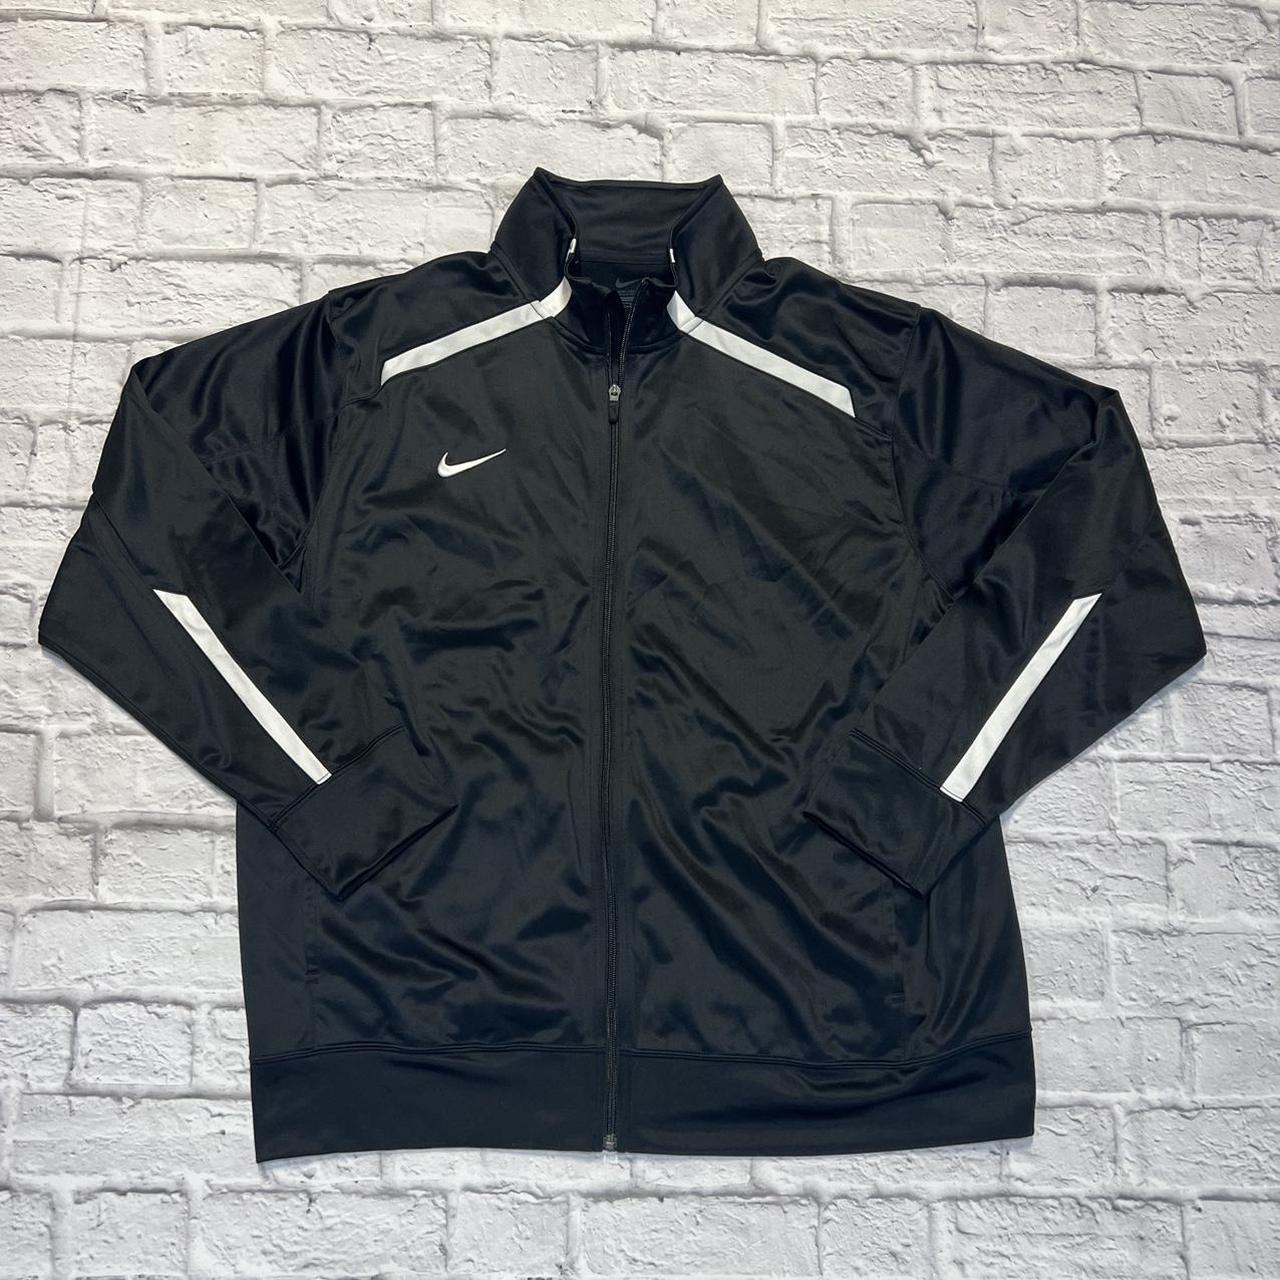 Nike Men's Black Full Zip Track Jacket Coat Training... - Depop